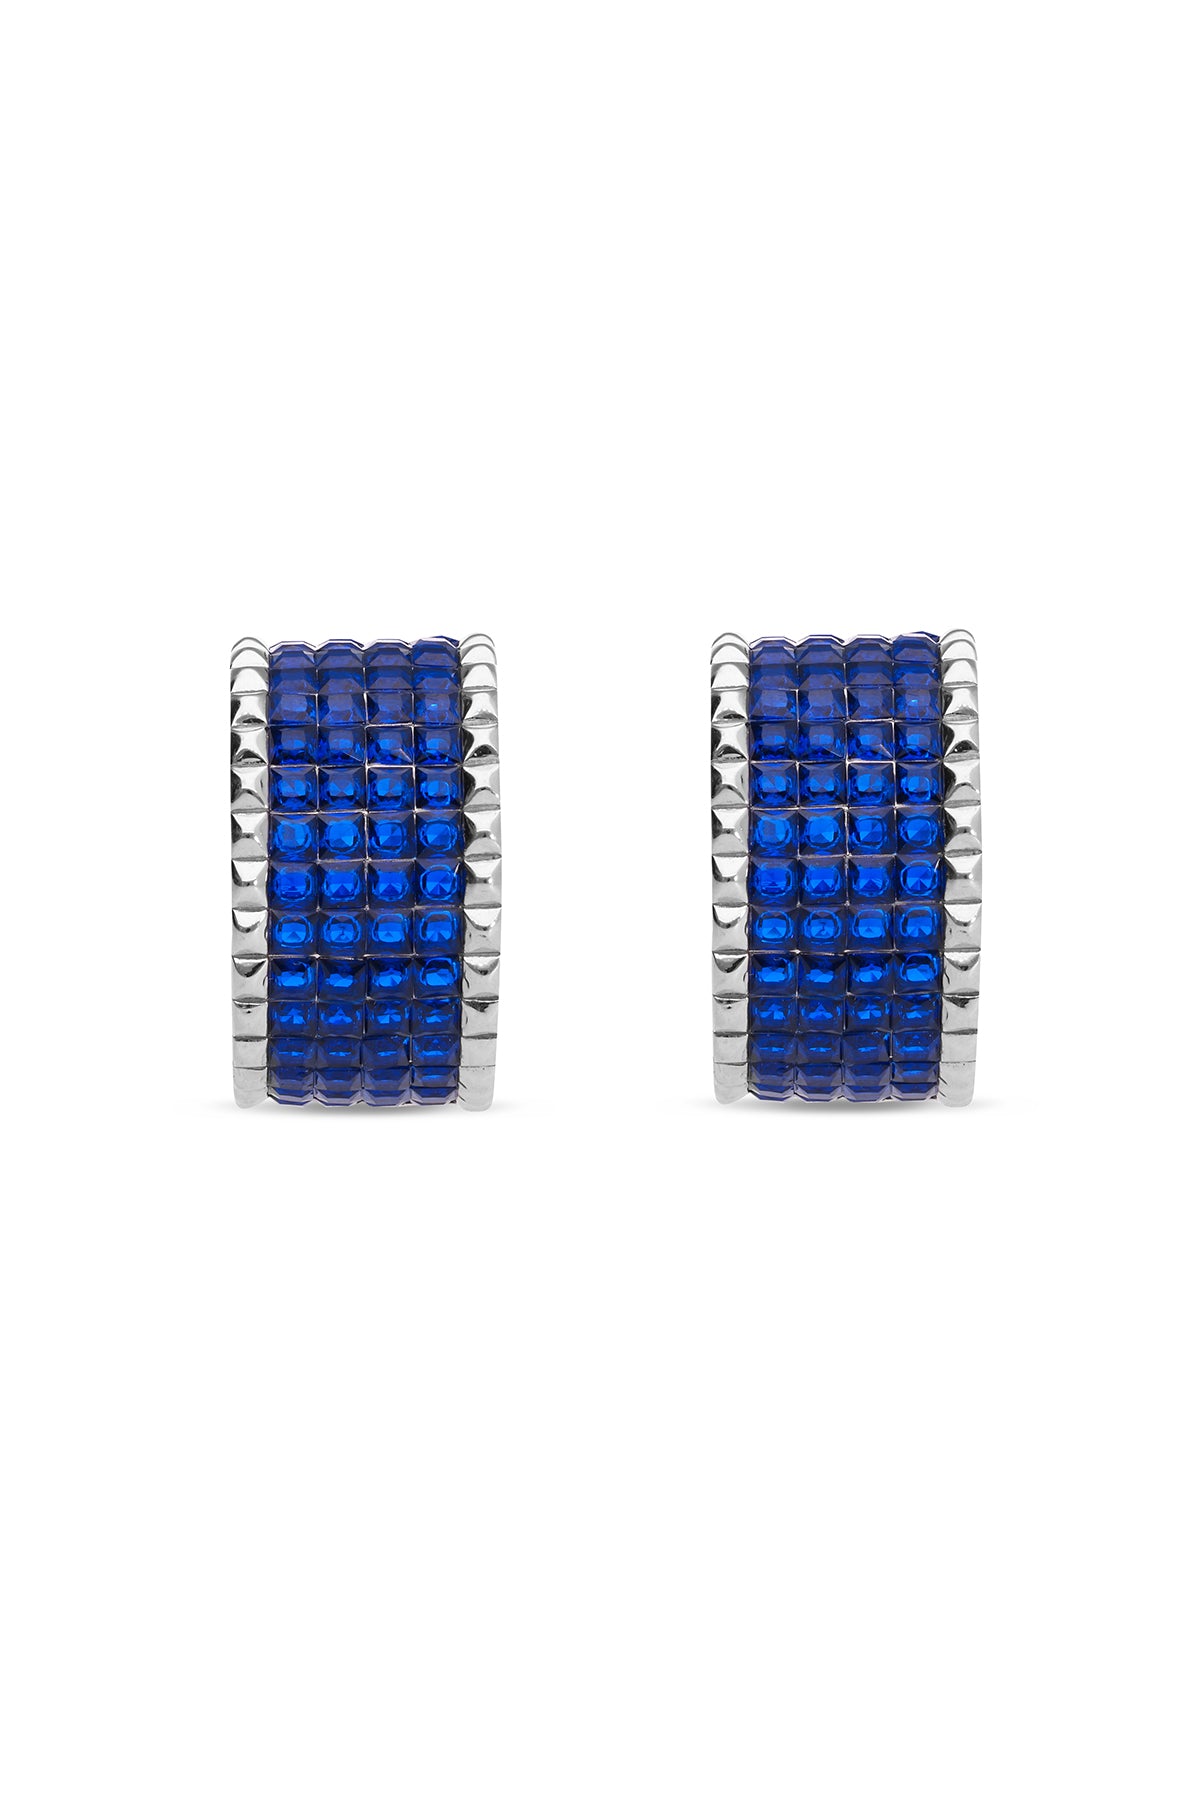 Circle Of Life Blue Sapphire earrings